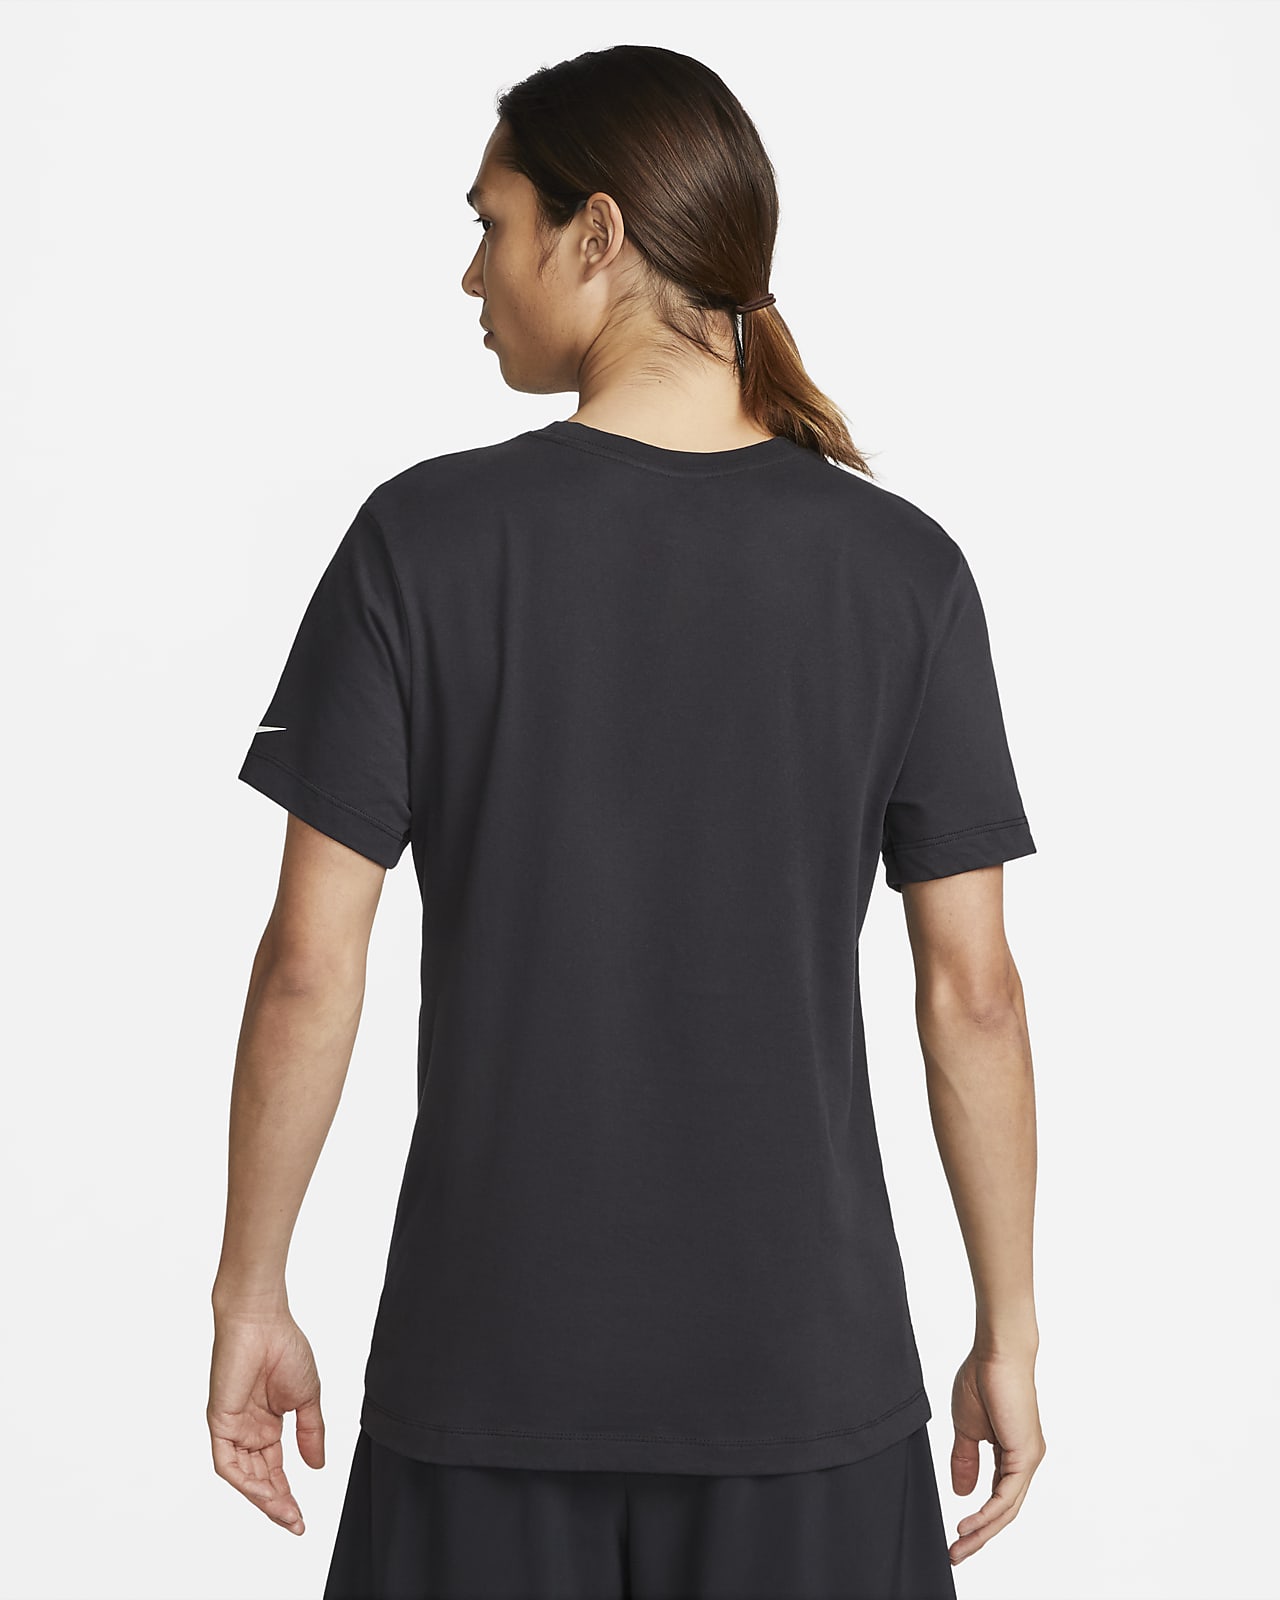 NIKE公式】ナイキコート Dri-FIT メンズ テニス Tシャツ.オンラインストア (通販サイト)